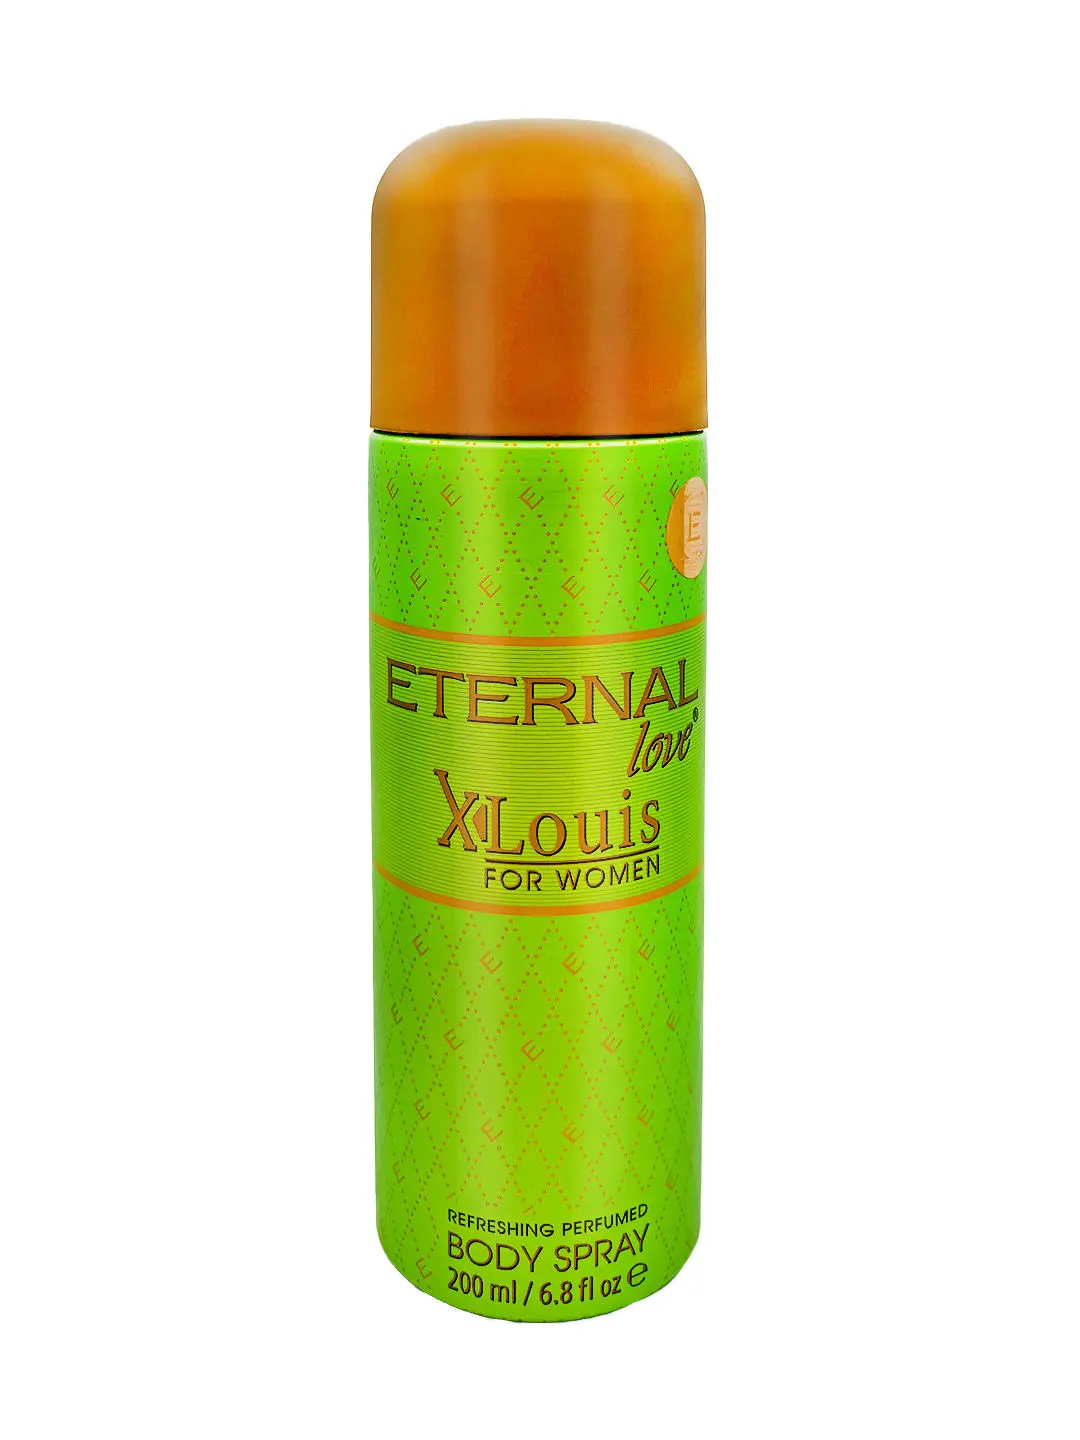 ETERNAL Love X-Louis for Women Deodorant Perfumed Bodyspray, (200 ml)